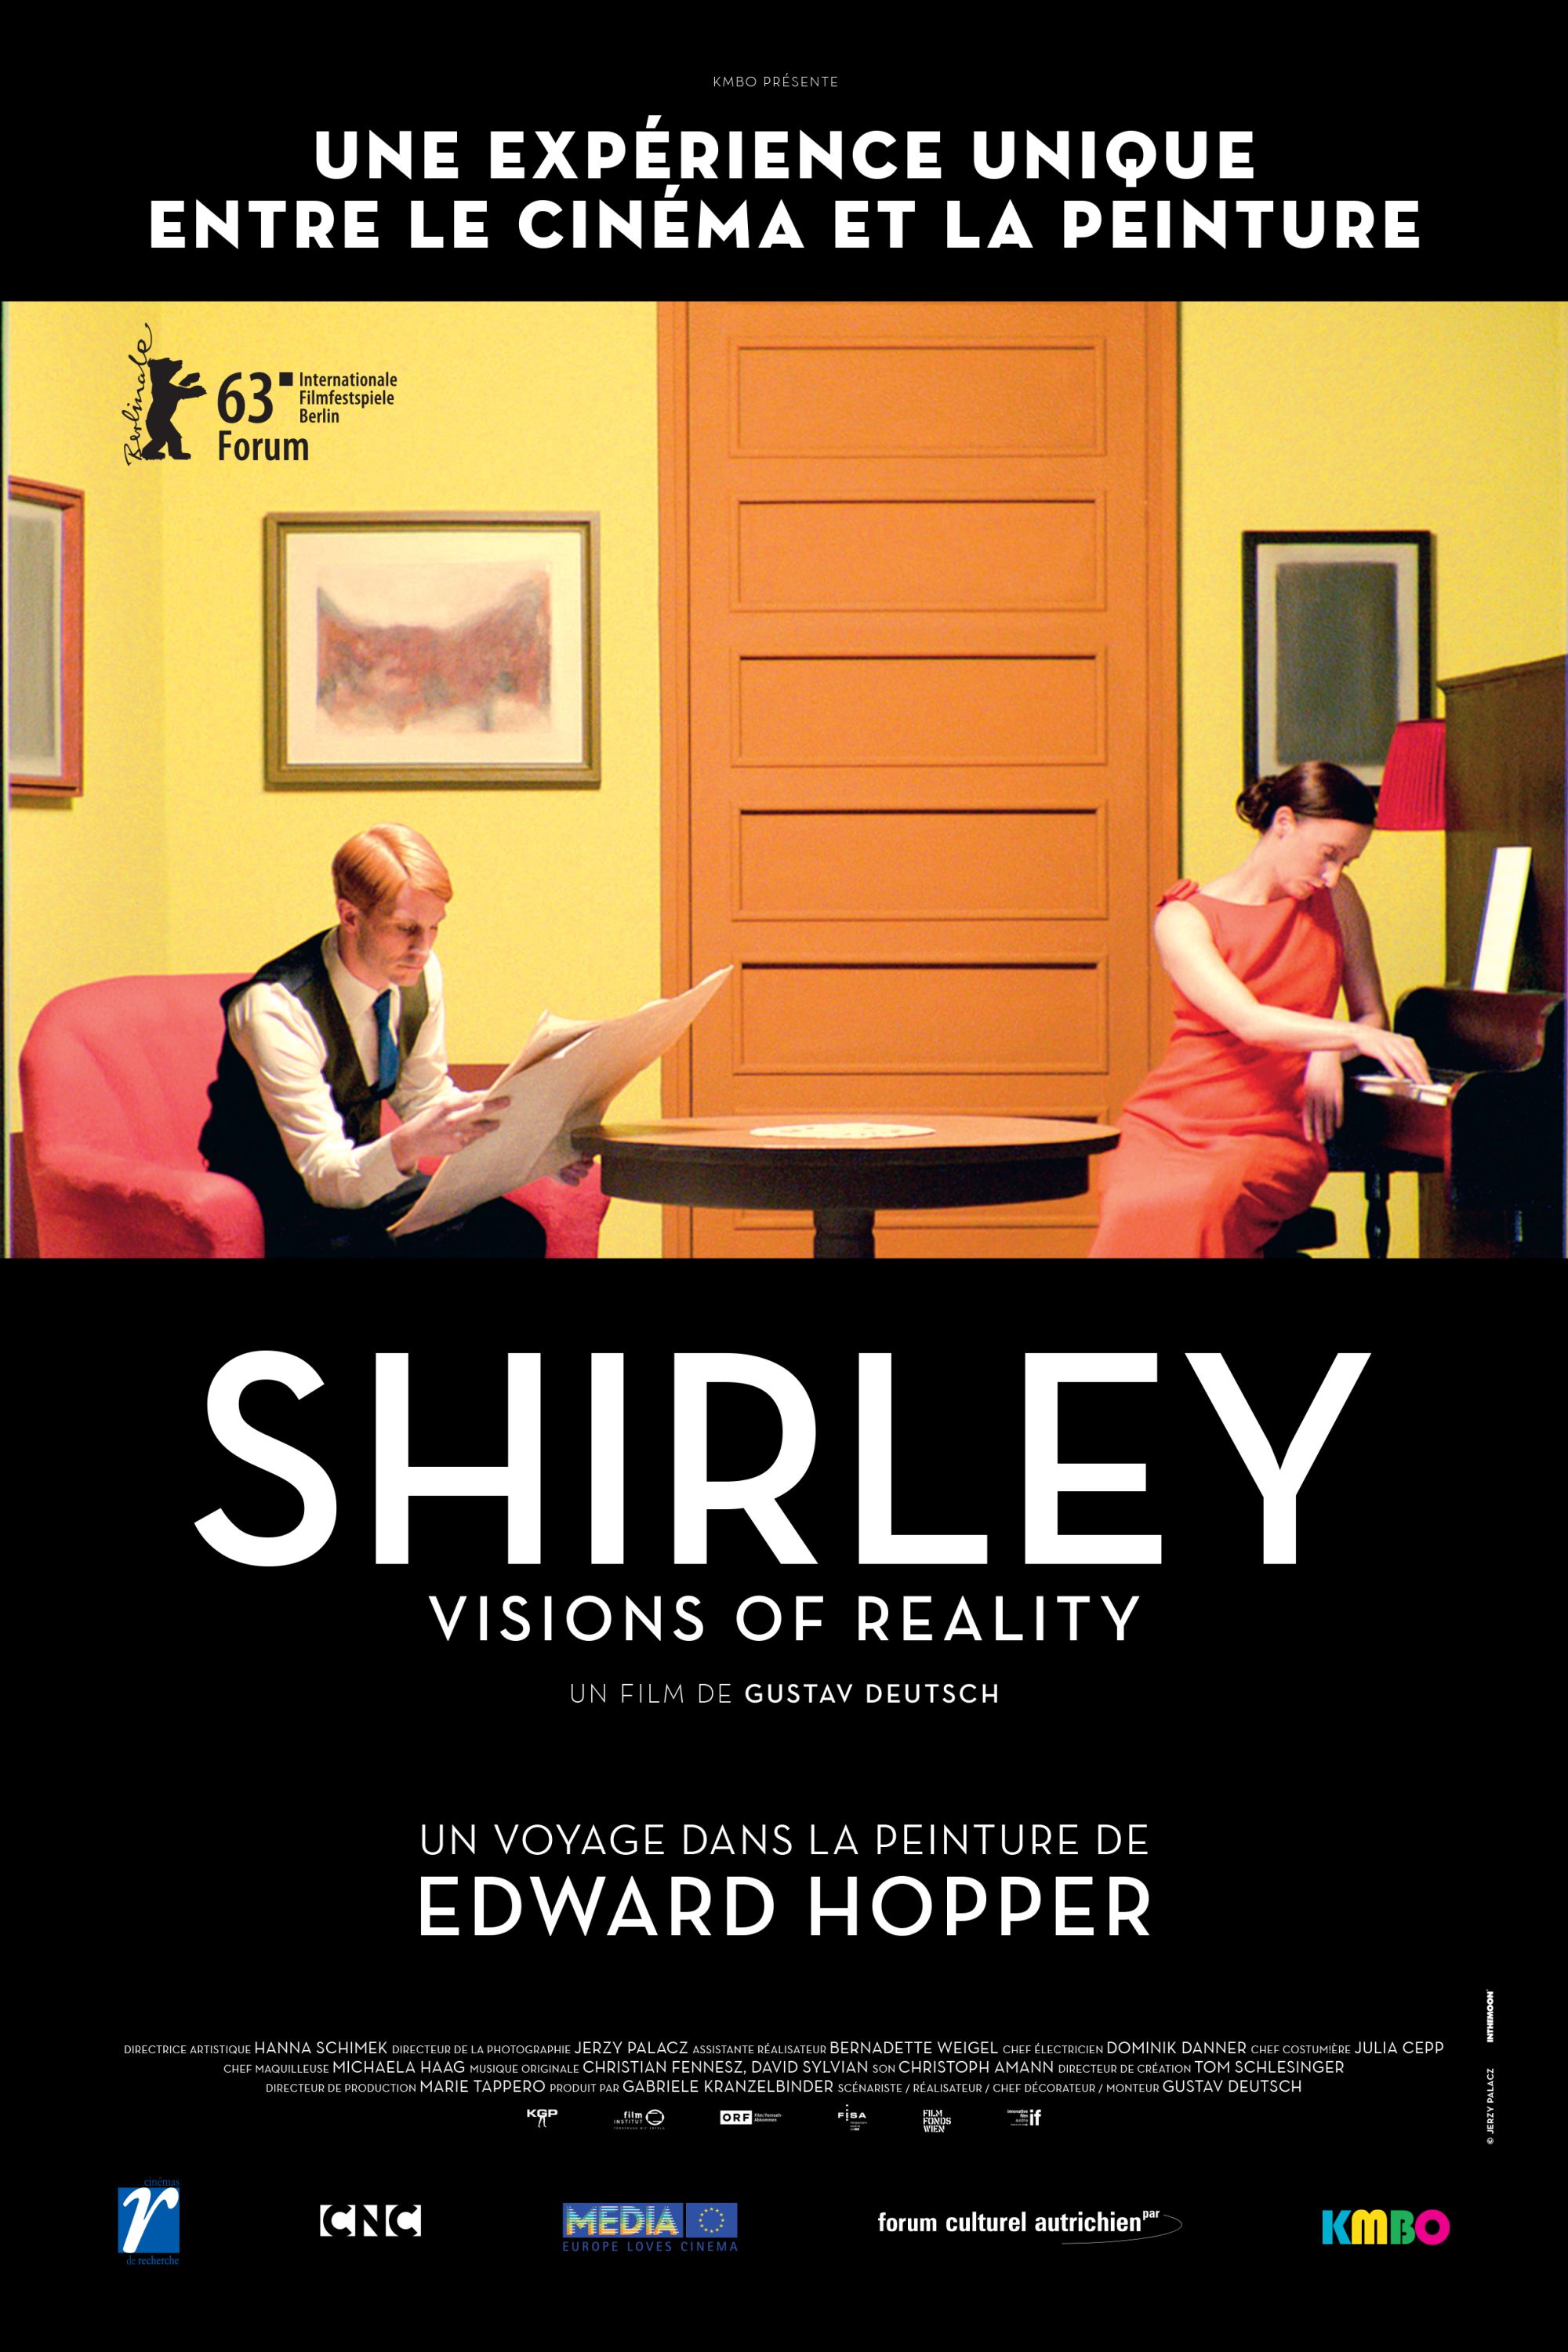 Shirley: Visions of Reality (2013) Screenshot 4 